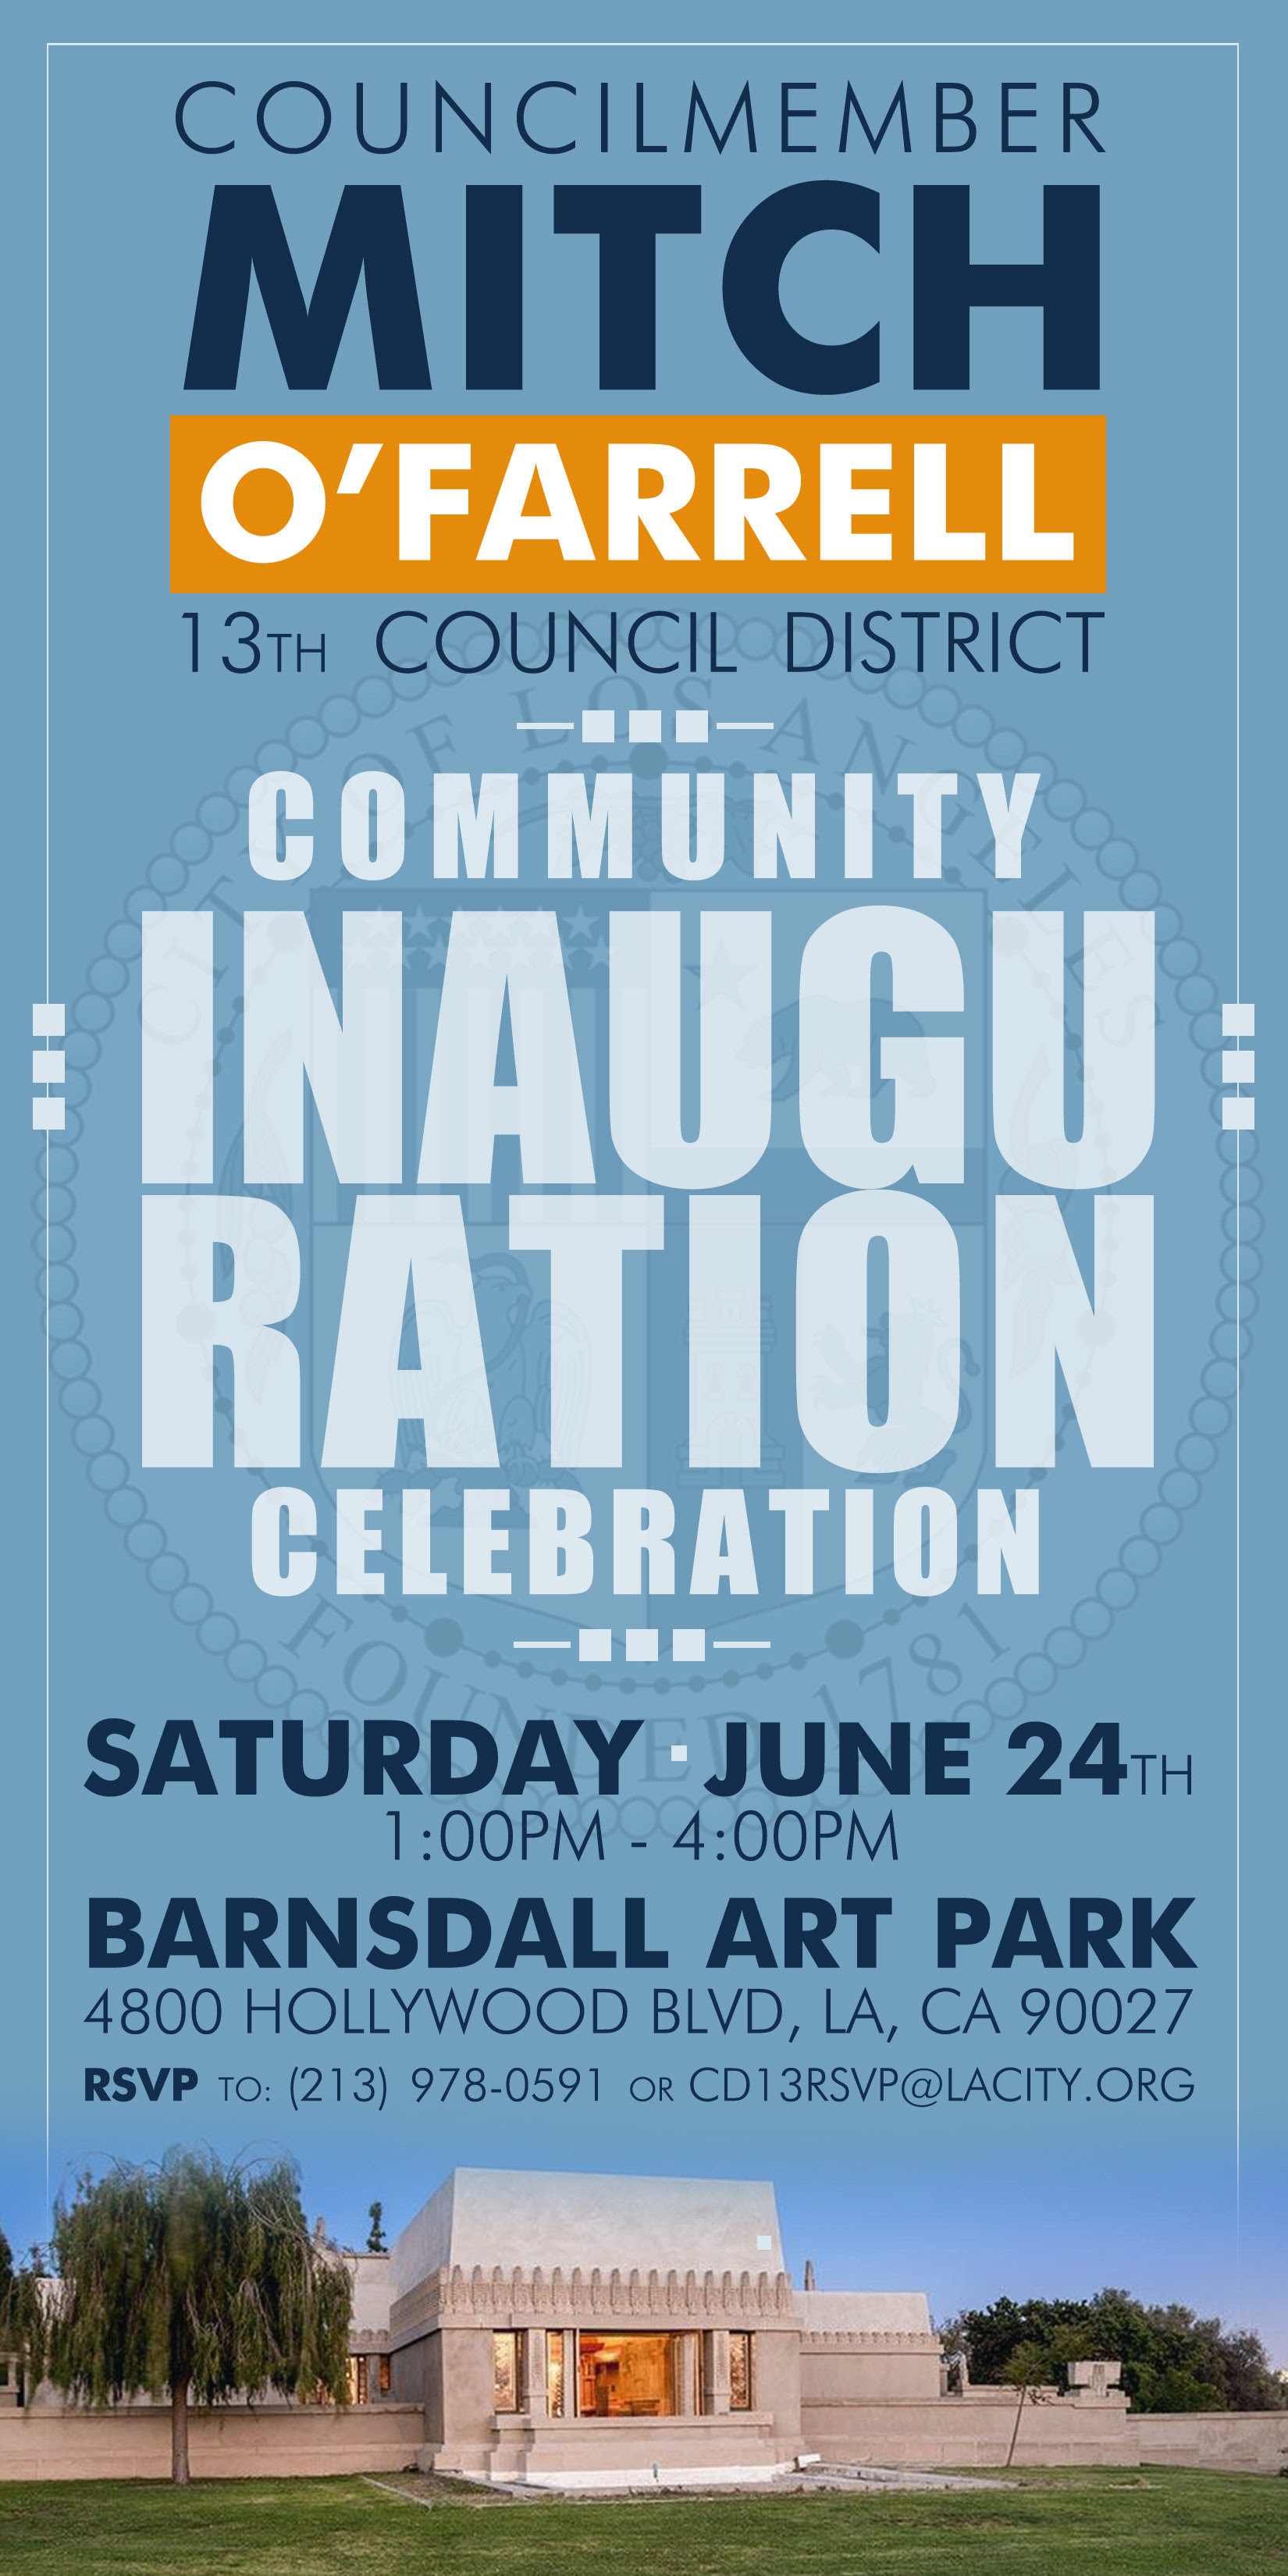 Councilmember Mitch O'Farrell Inauguration and Community Celebration | Silver Lake Realtor | Silver Lake Real Estate Agent